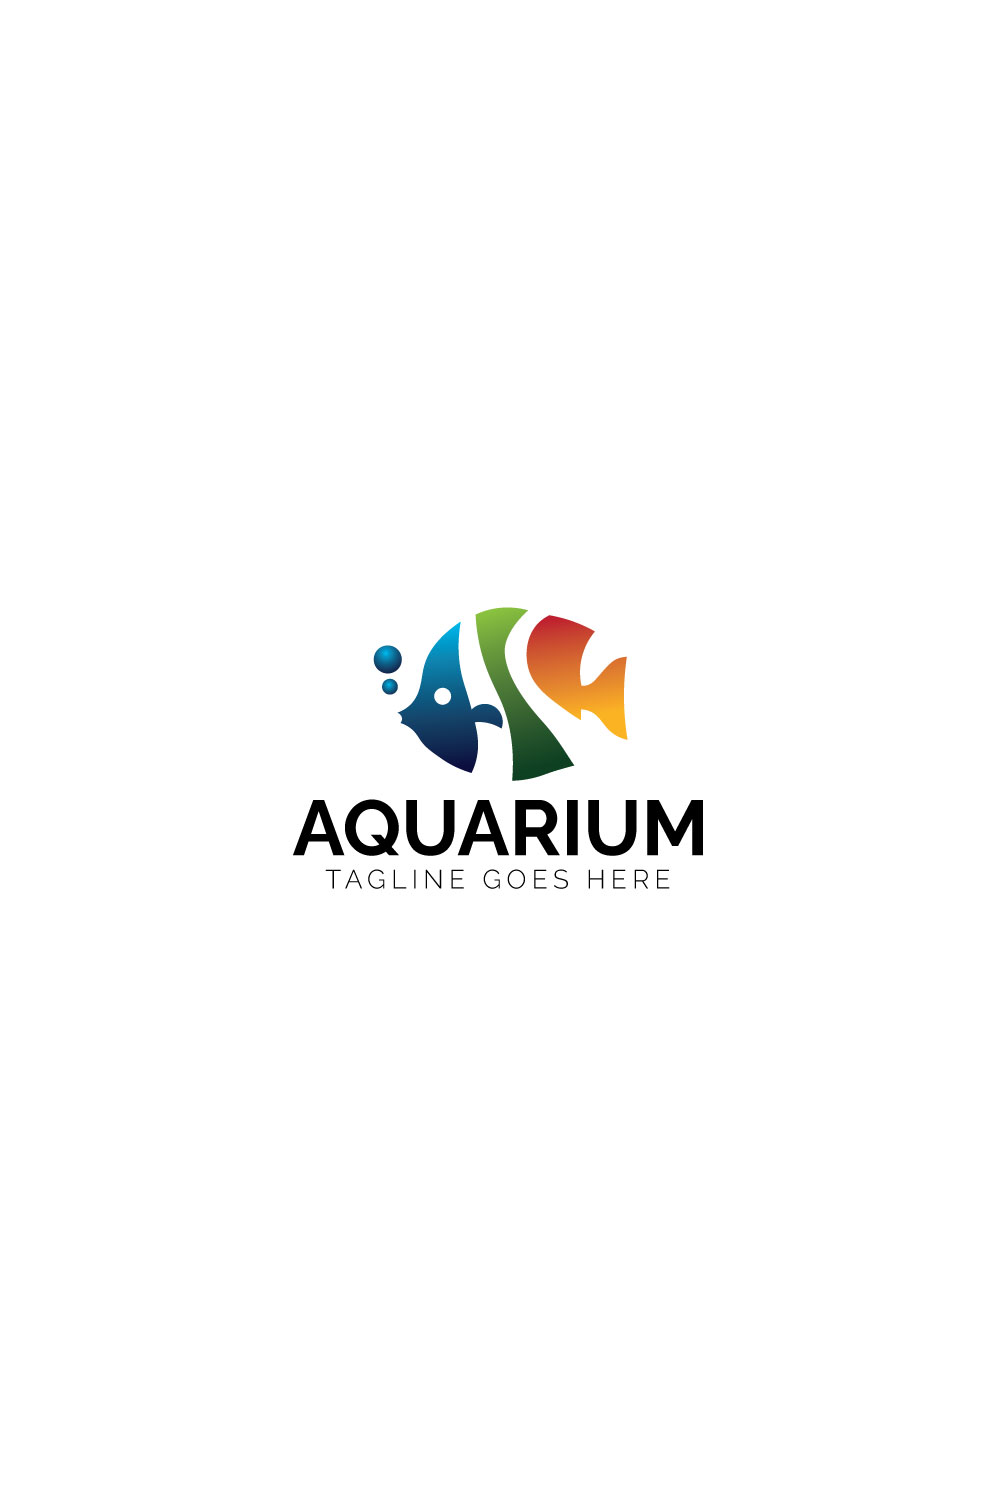 Aquarium Logo pinterest preview image.